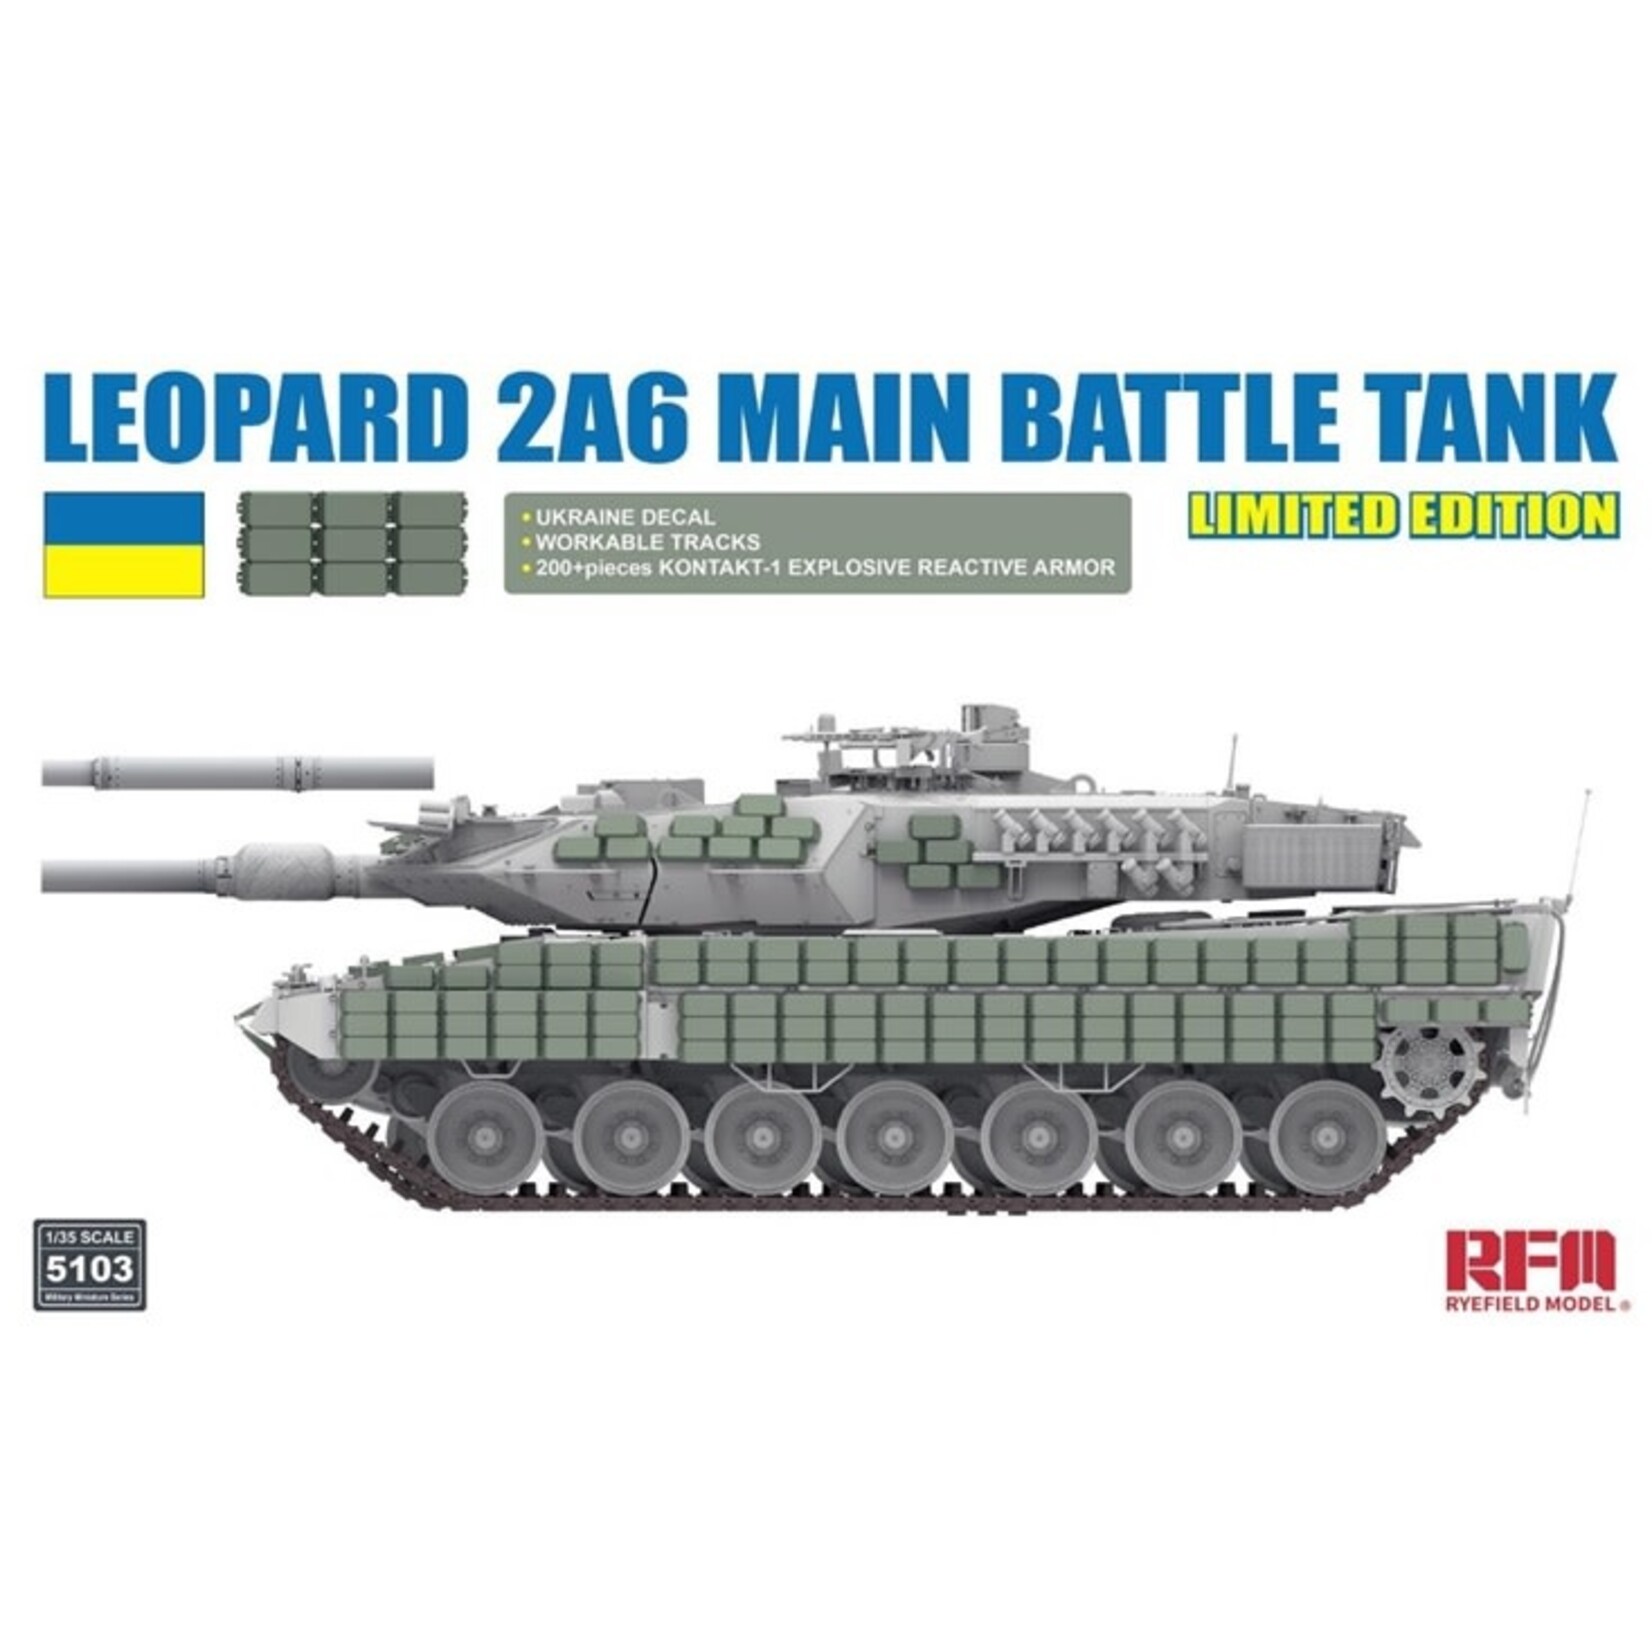 Rye Field Model RFMRM5103 Leopard 2A6 with Ukraine Decals & Kontakt-1 Armour (1/35)